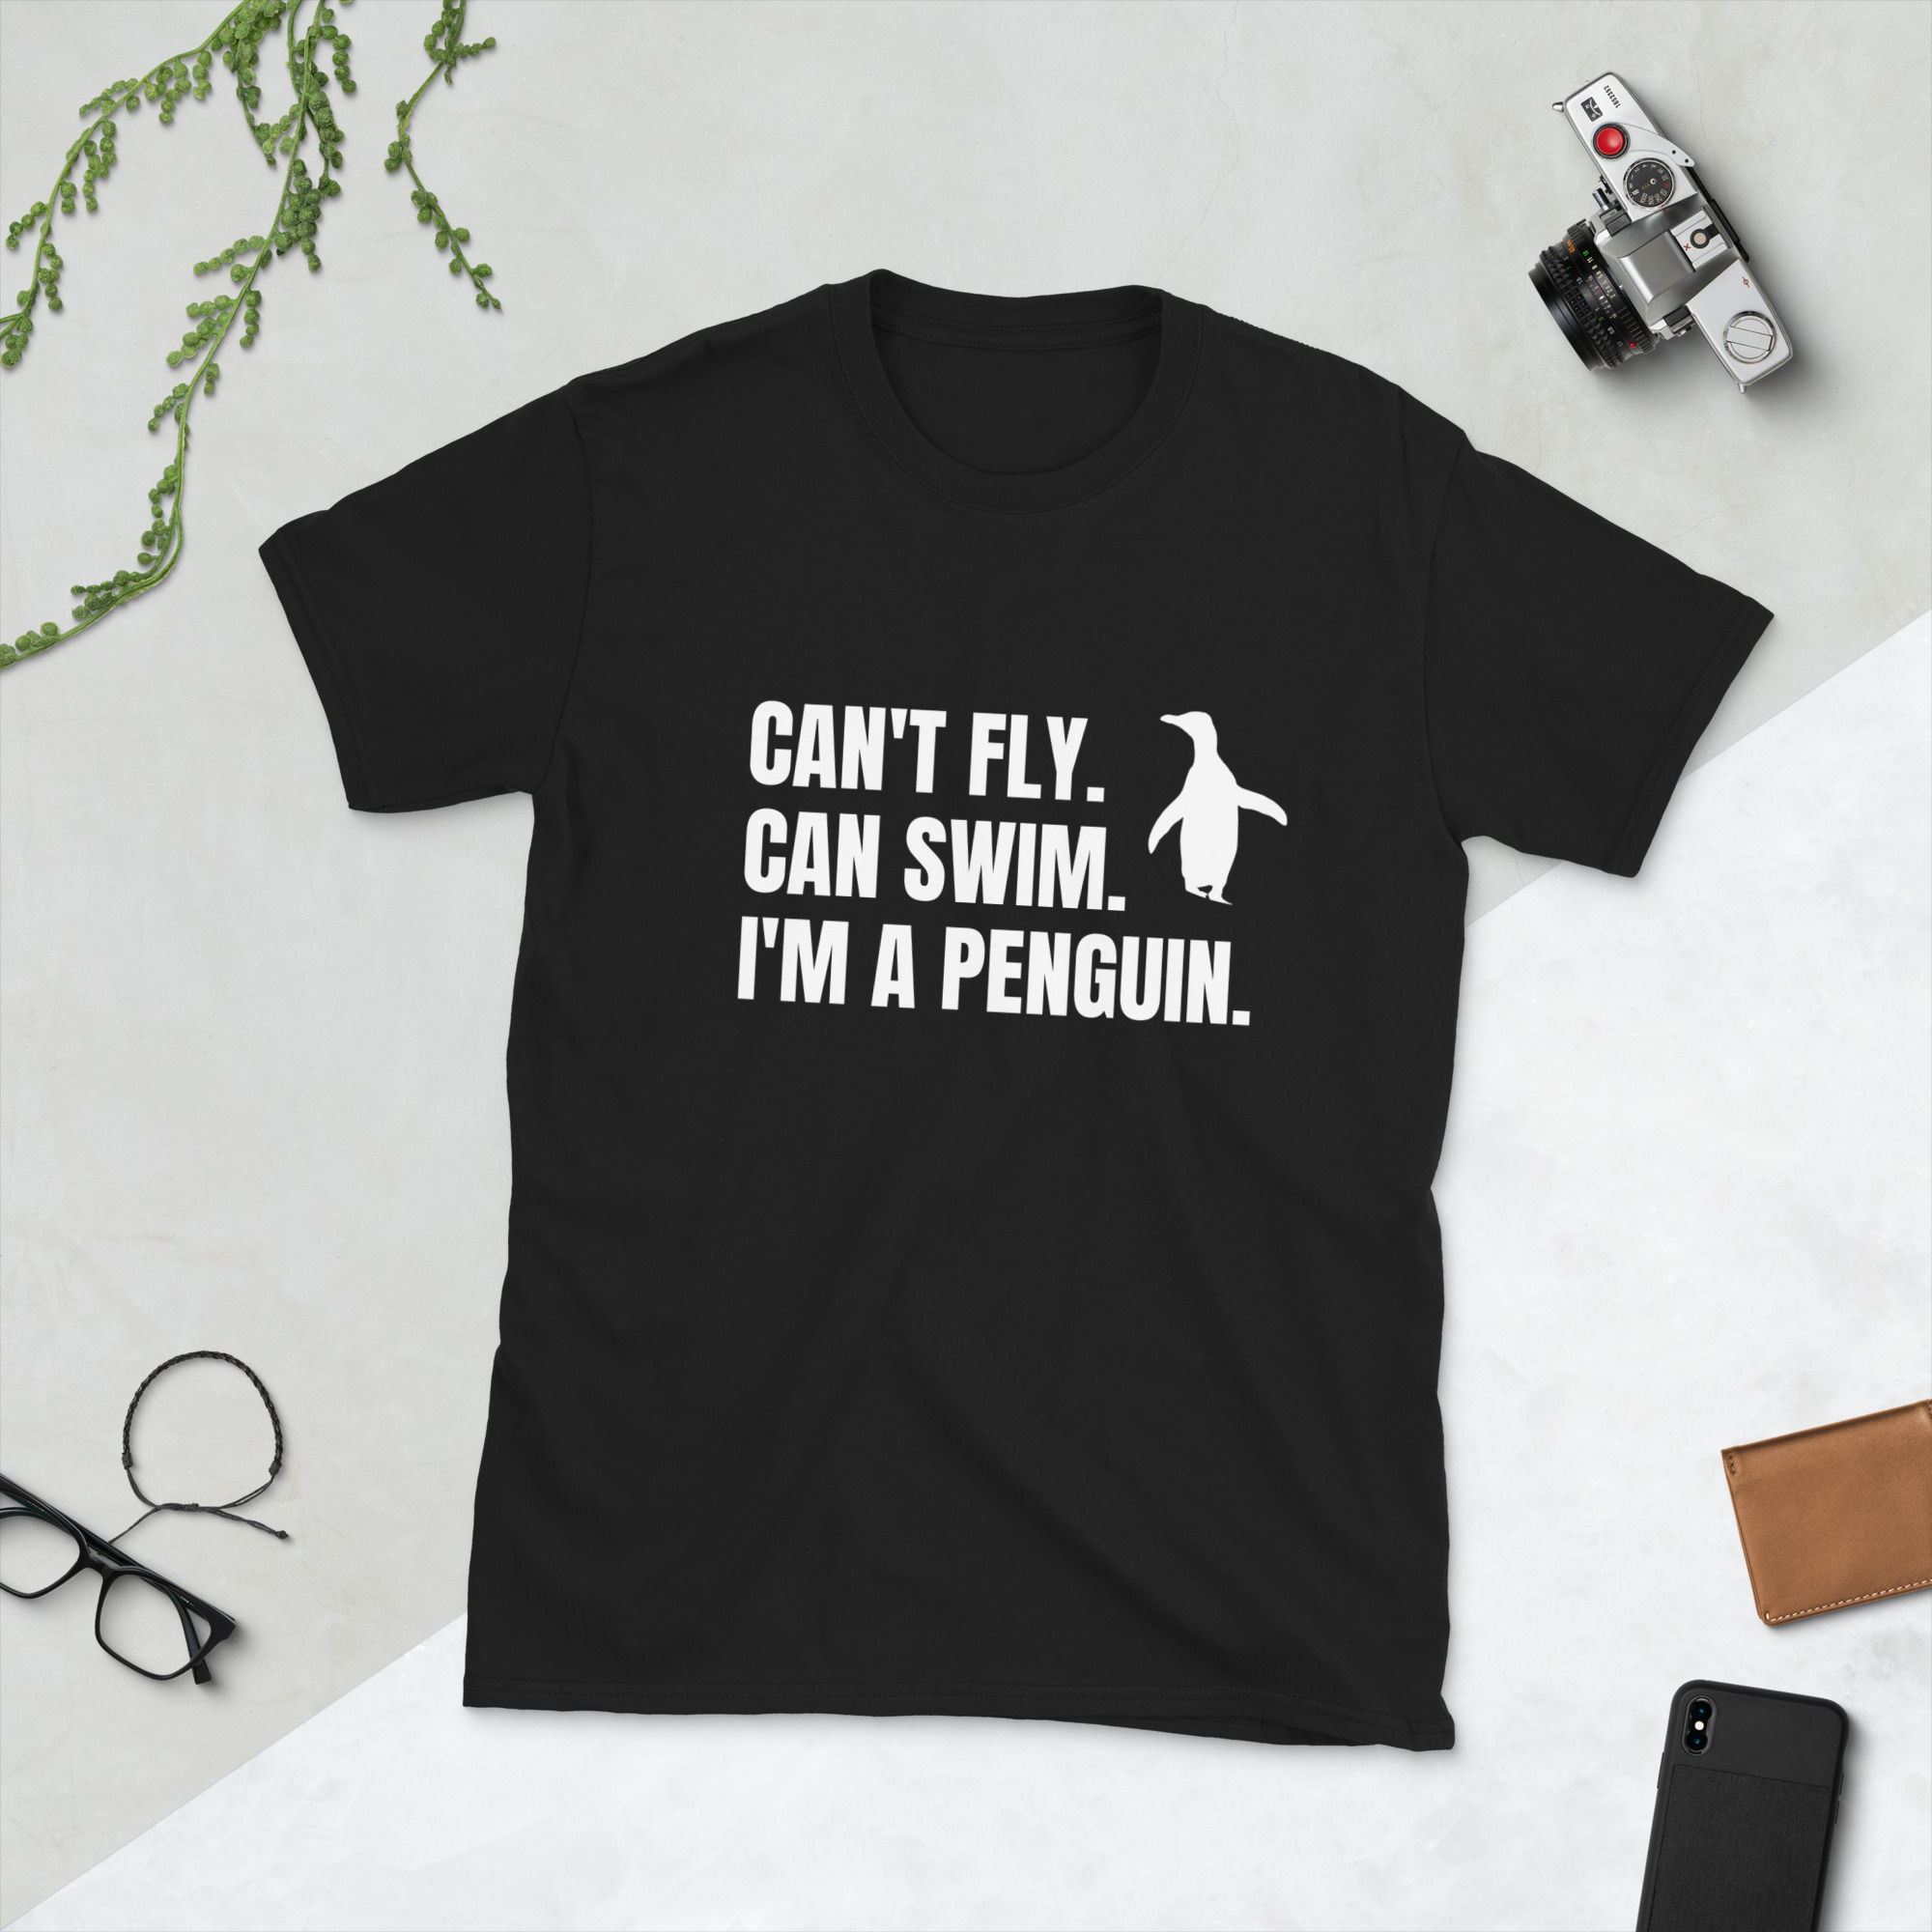 I’m a Penguin Short-Sleeve Unisex T-Shirt